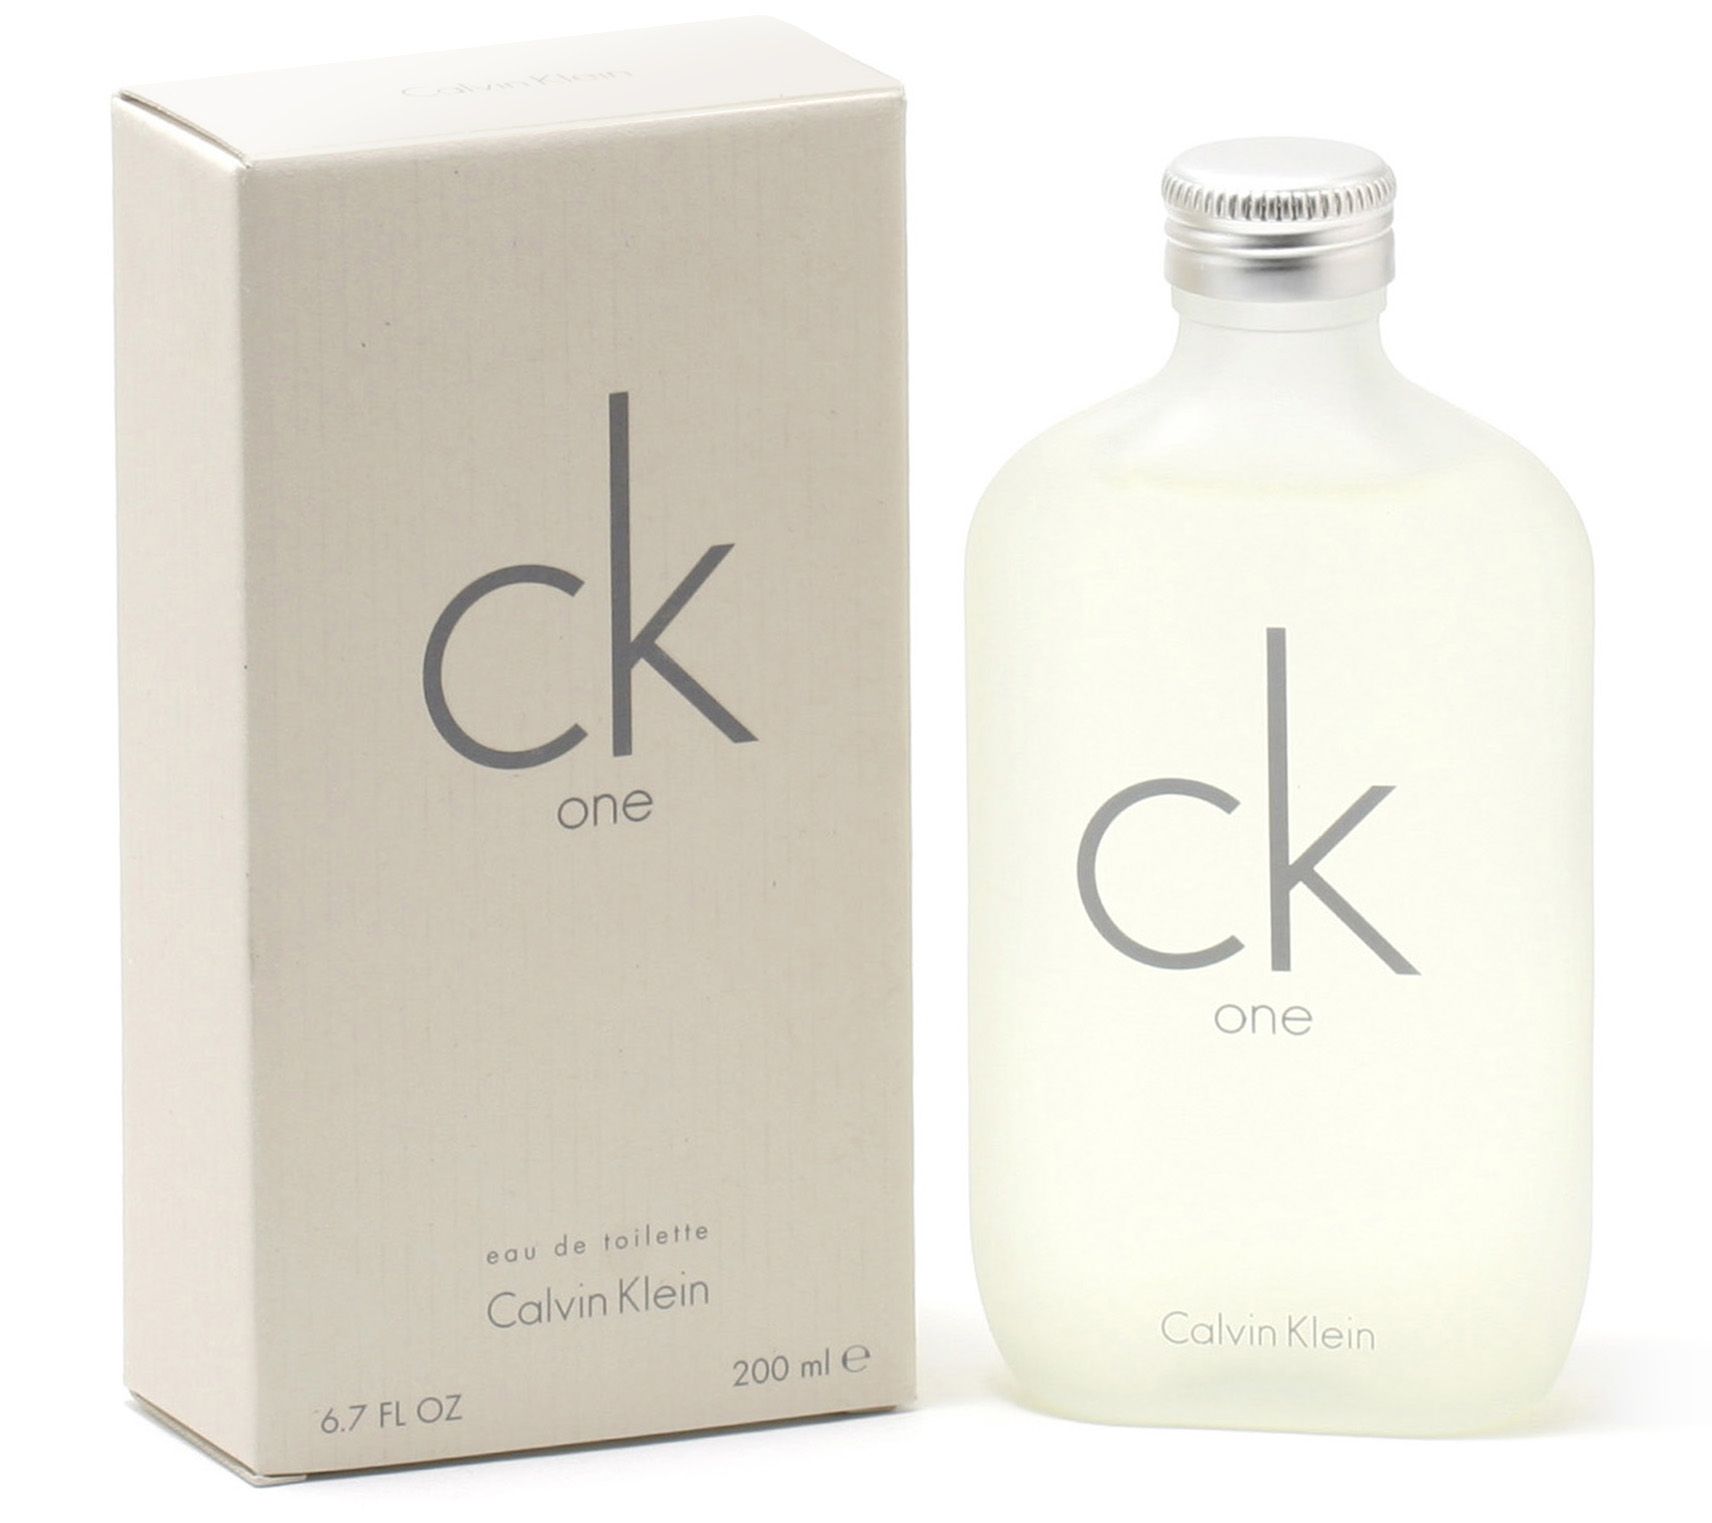 Calvin Klein - CK be - Comprar em The King of Tester